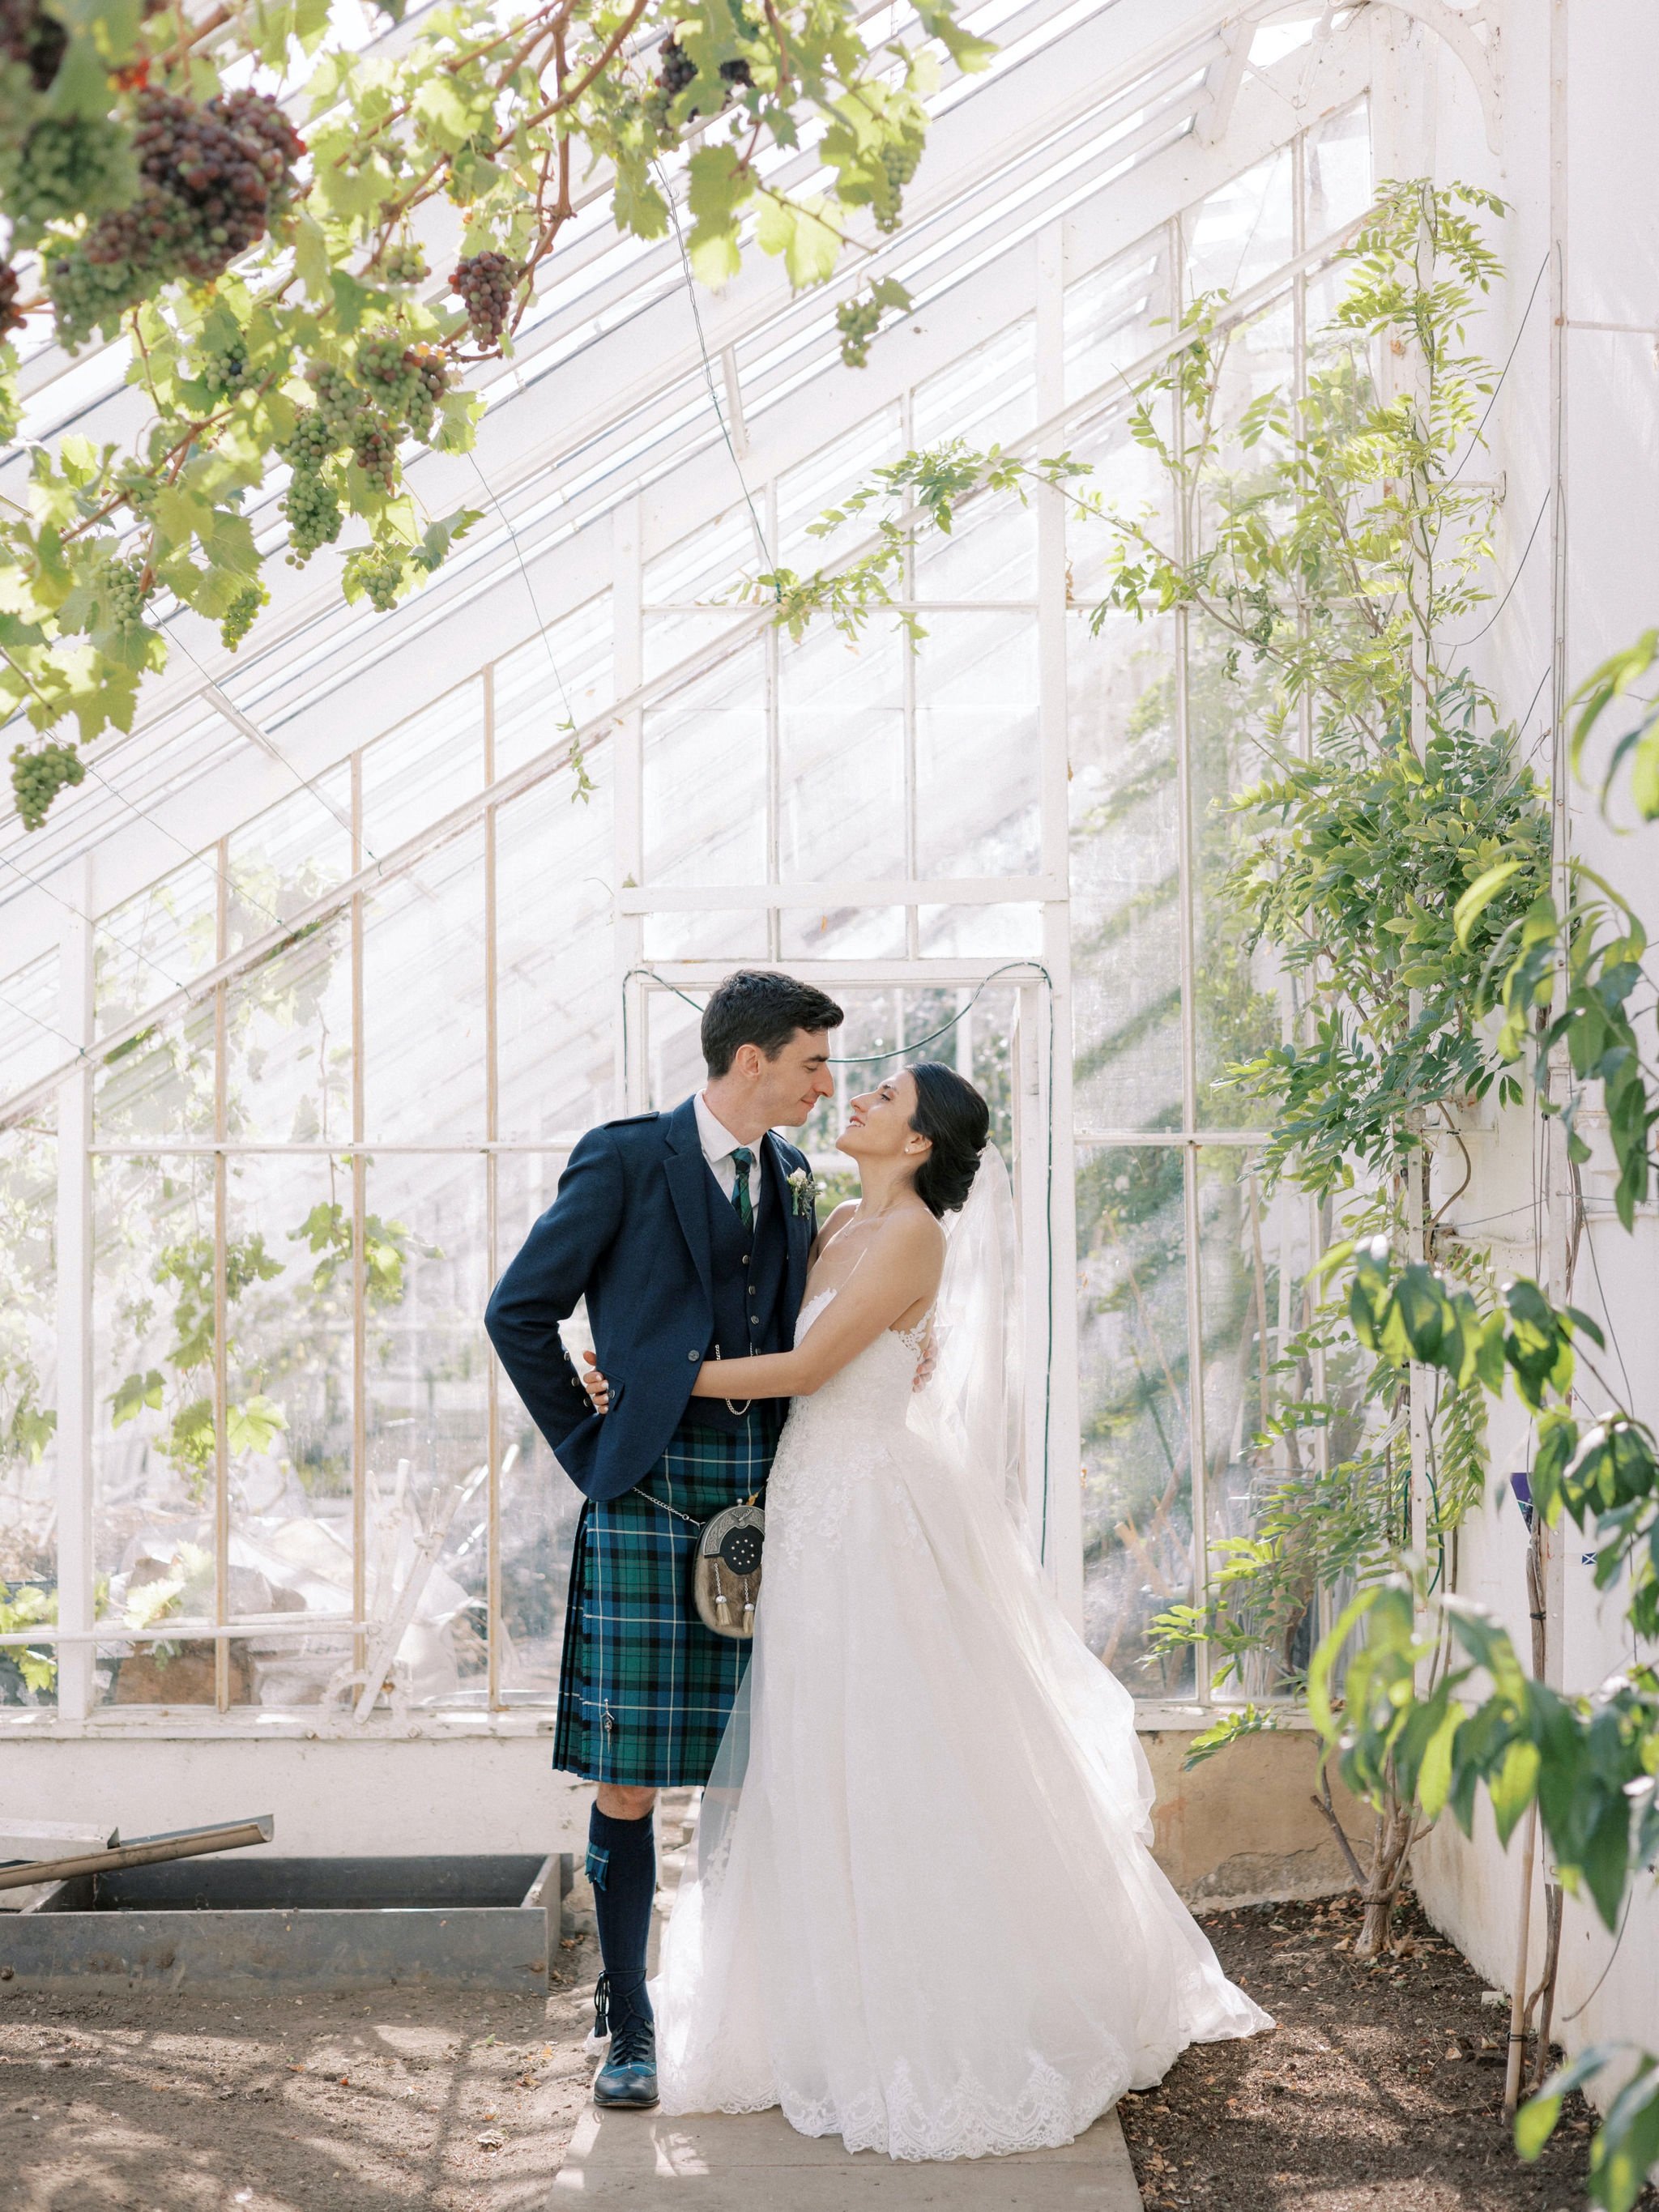 29_carlowrie castle edinburgh wedding photographer bride and groom in greenhouse.jpg